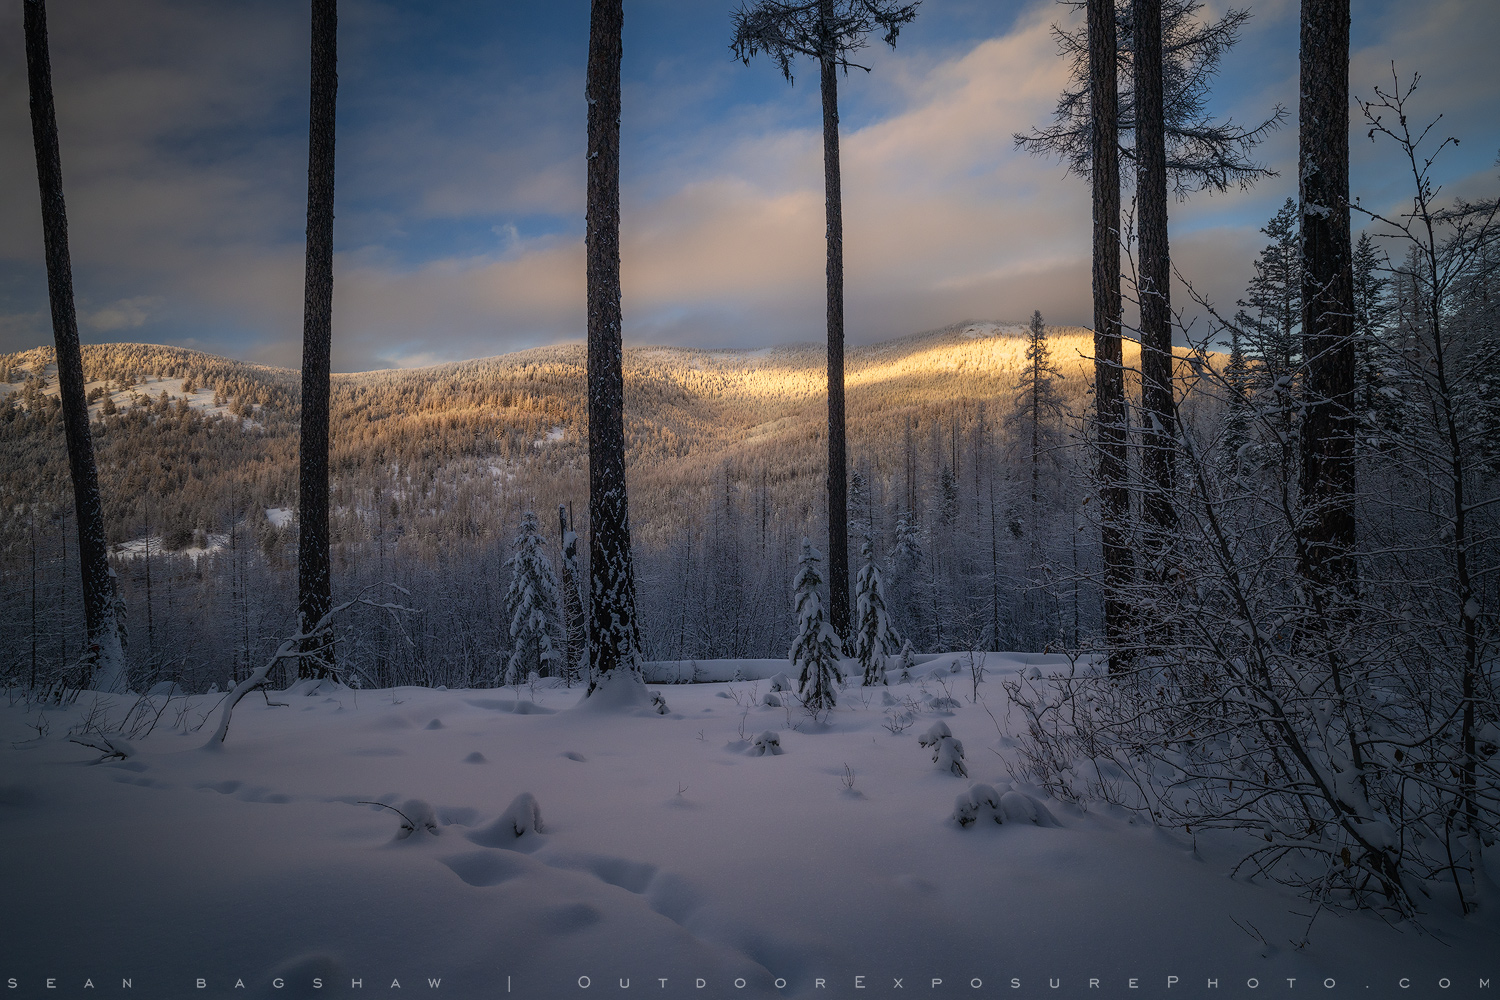 Kettle Mountains in Winter, Washington State, USA Sean Bagshaw